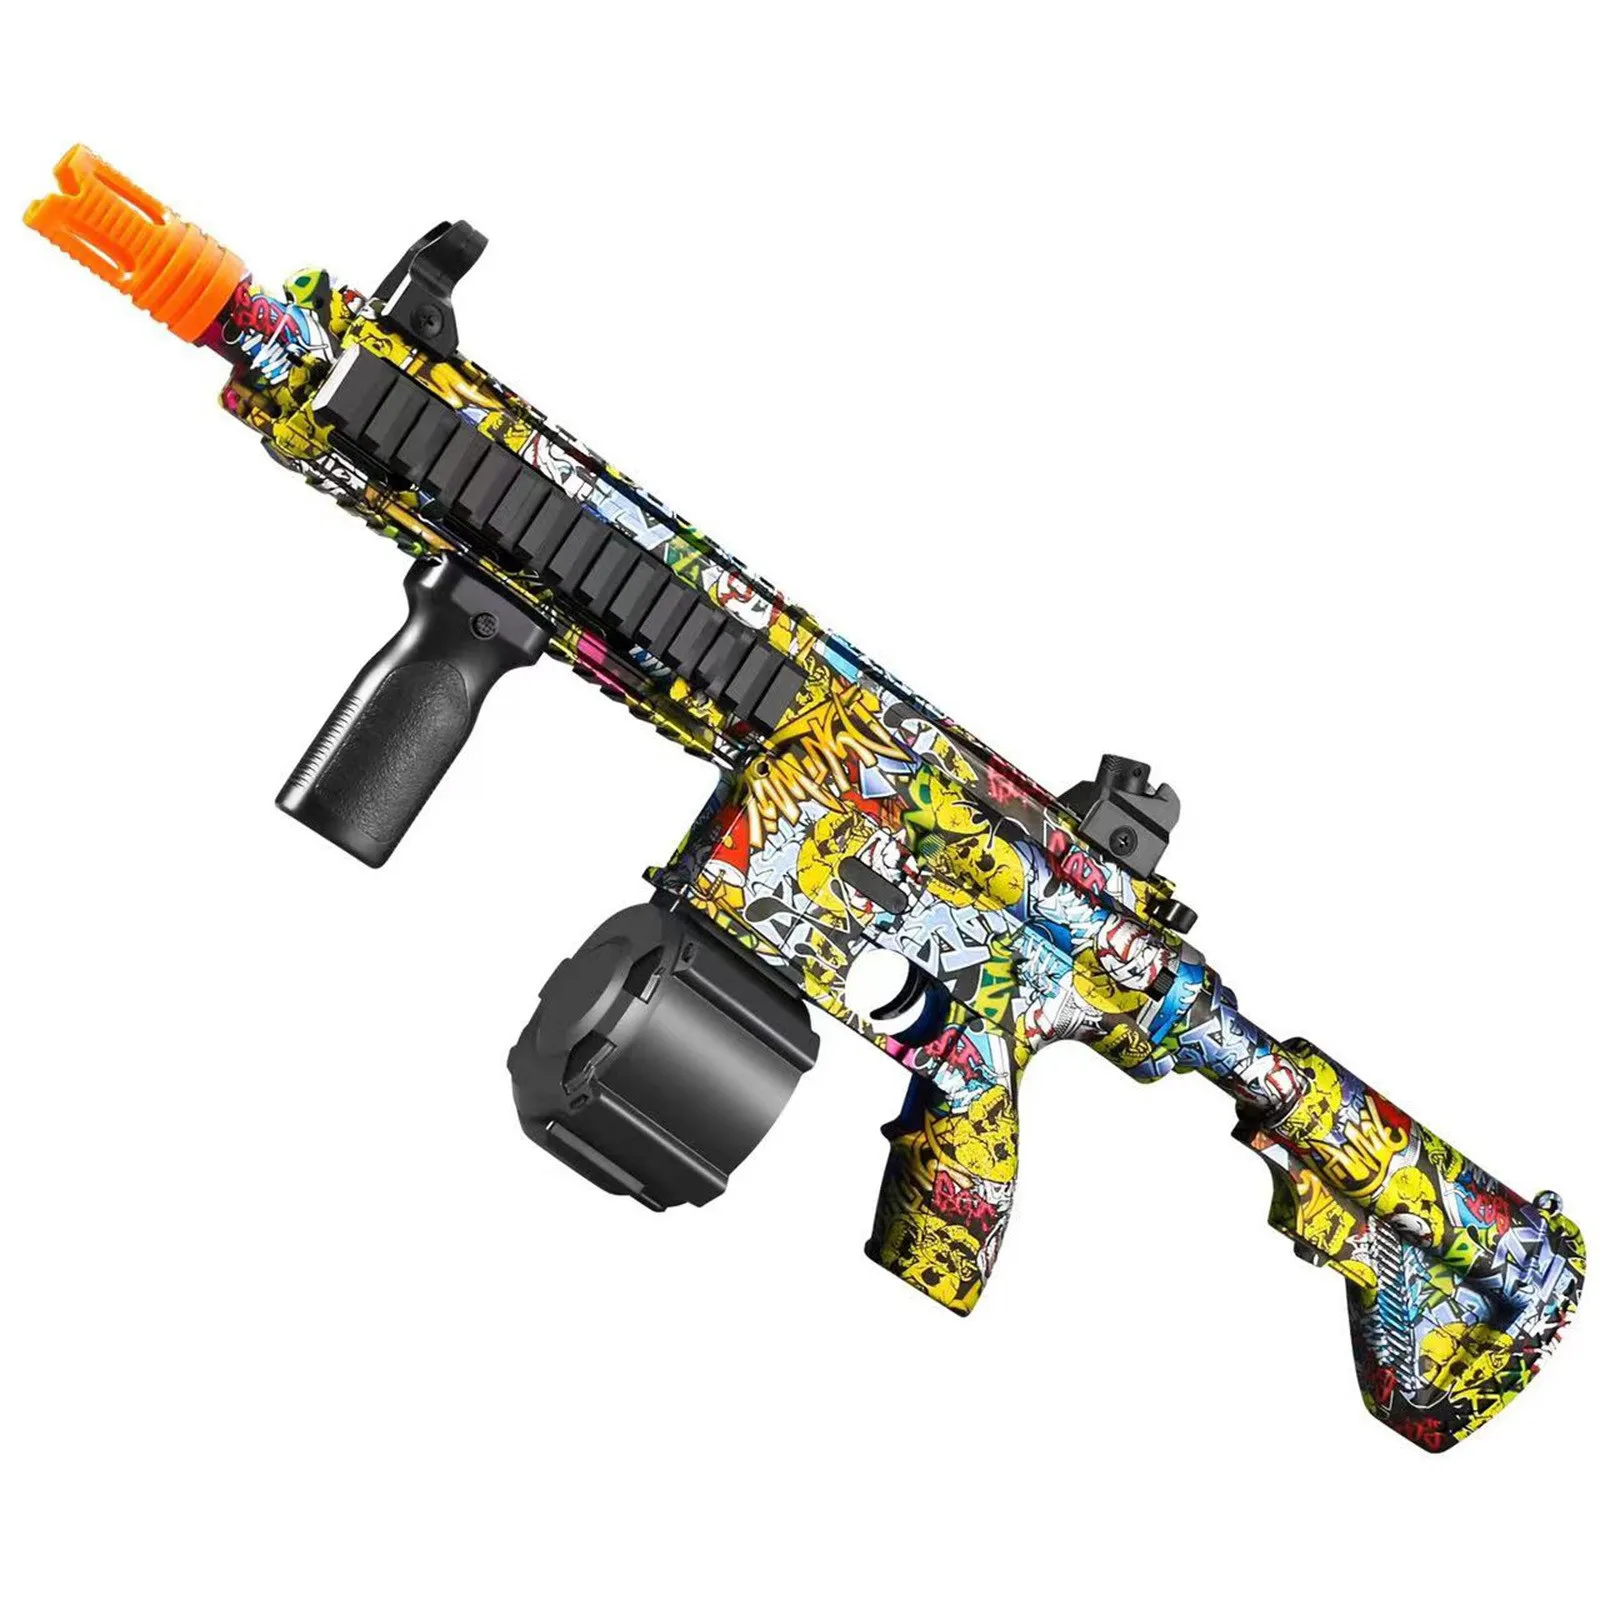 

Water Gel Blaster Gun Electric Graffiti Air Rifle Weapons Paintball Toy Guns Pneumatic Gun For Shooting Adults Kids CS Boys Gift